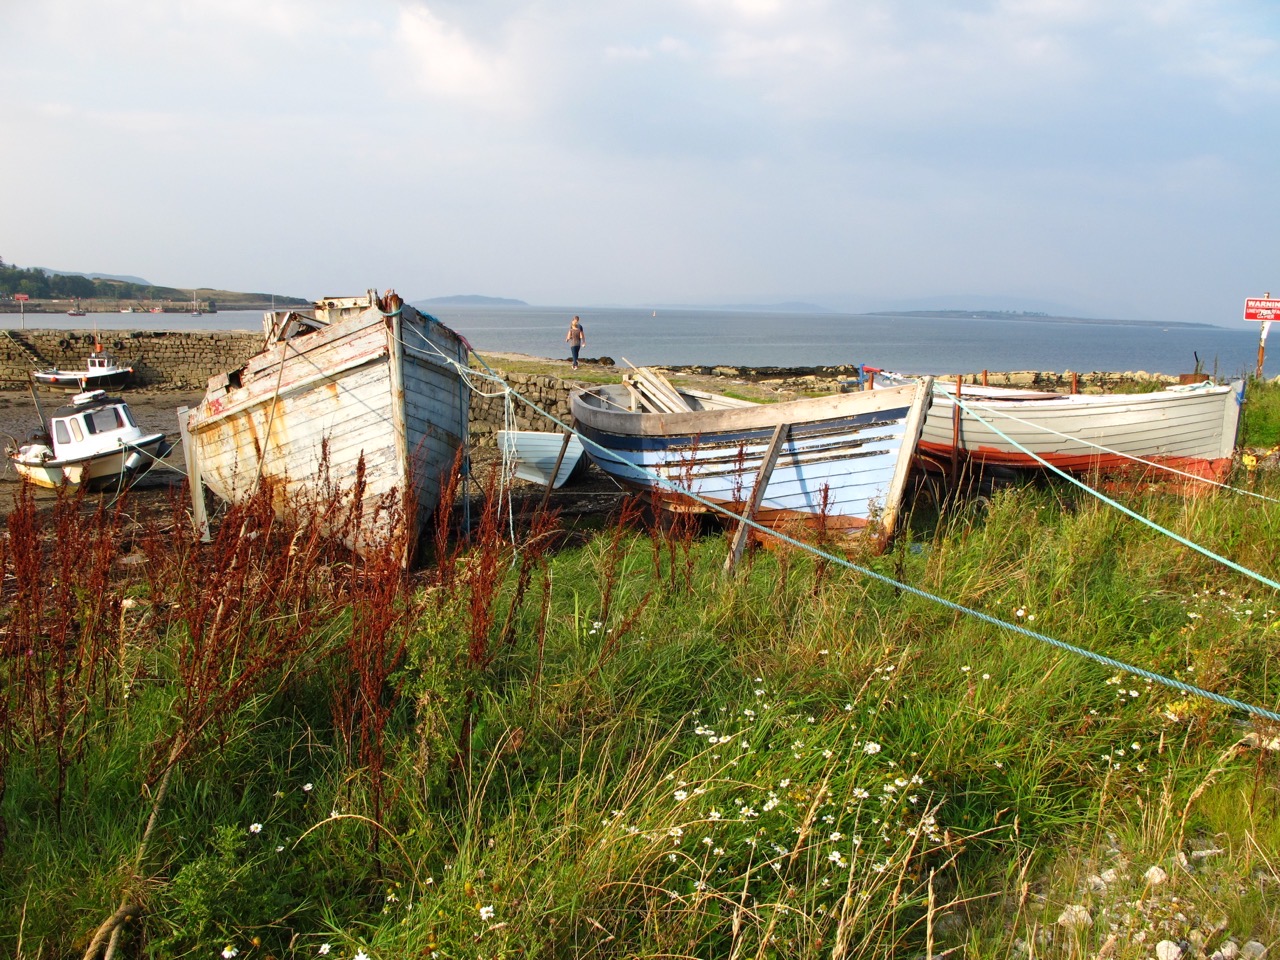 Boats on the Isle of Skye